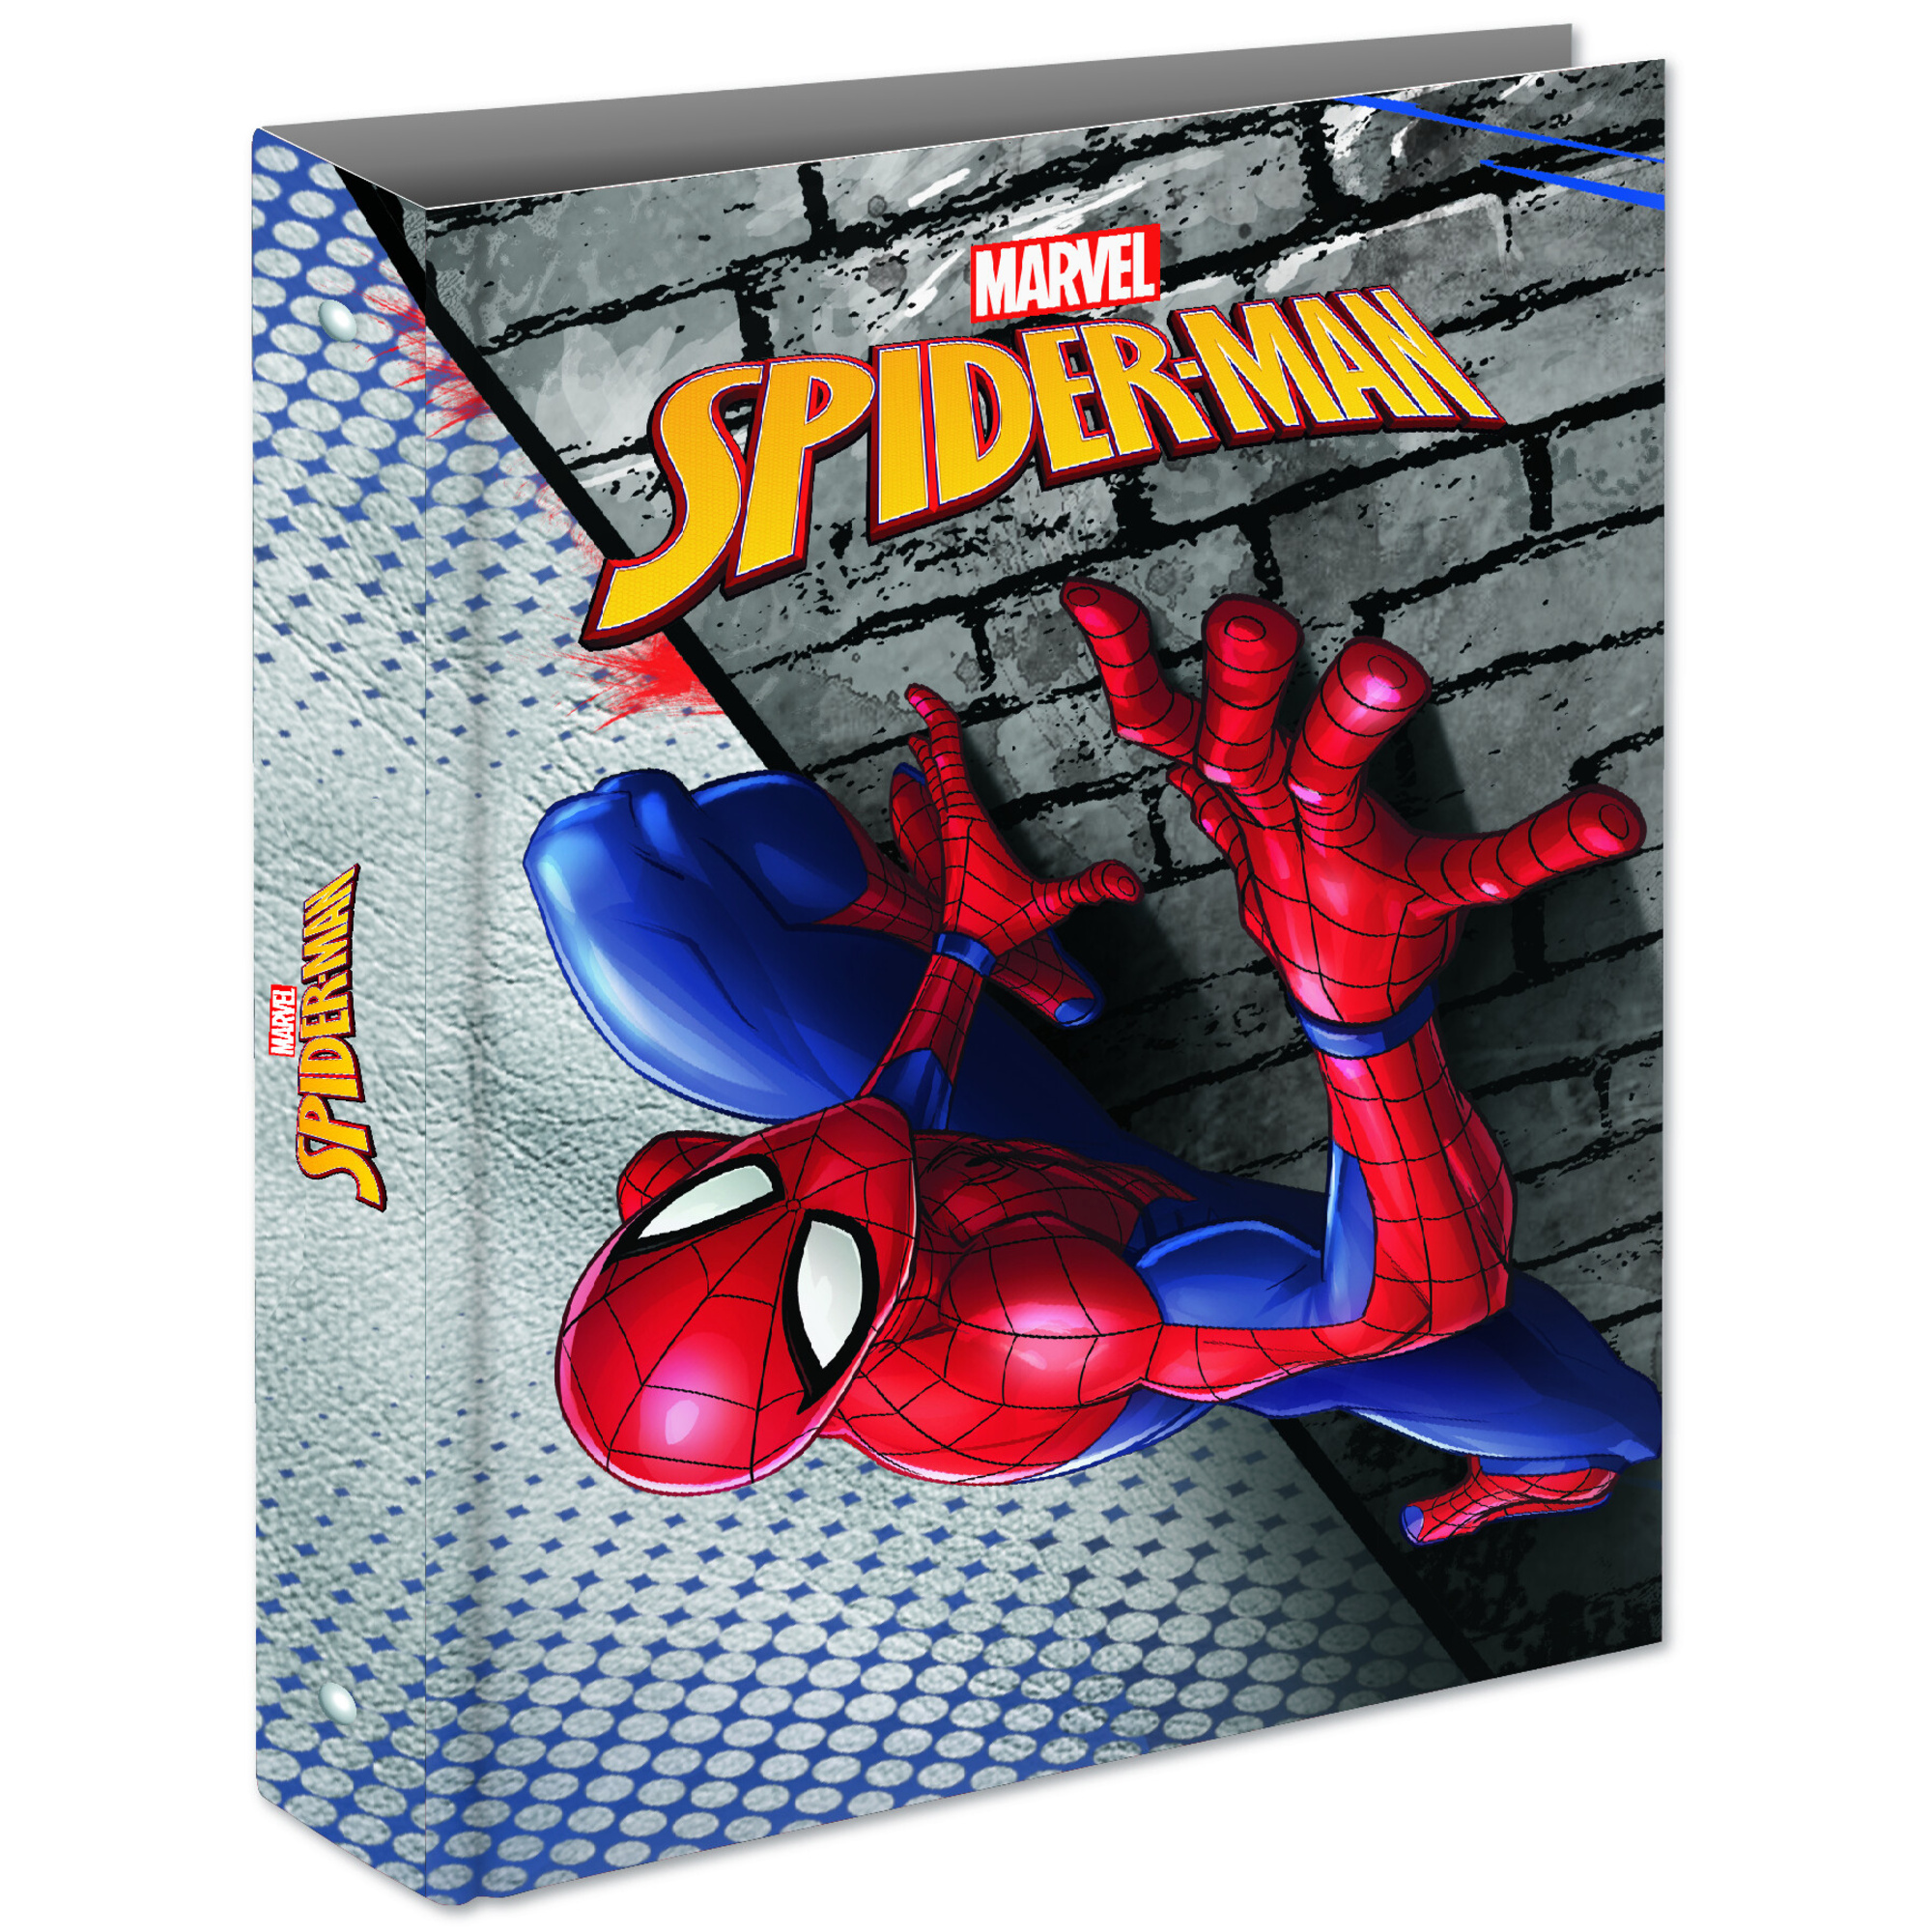 Cop.an.a4 maxi d30 # spider-man - Spiderman